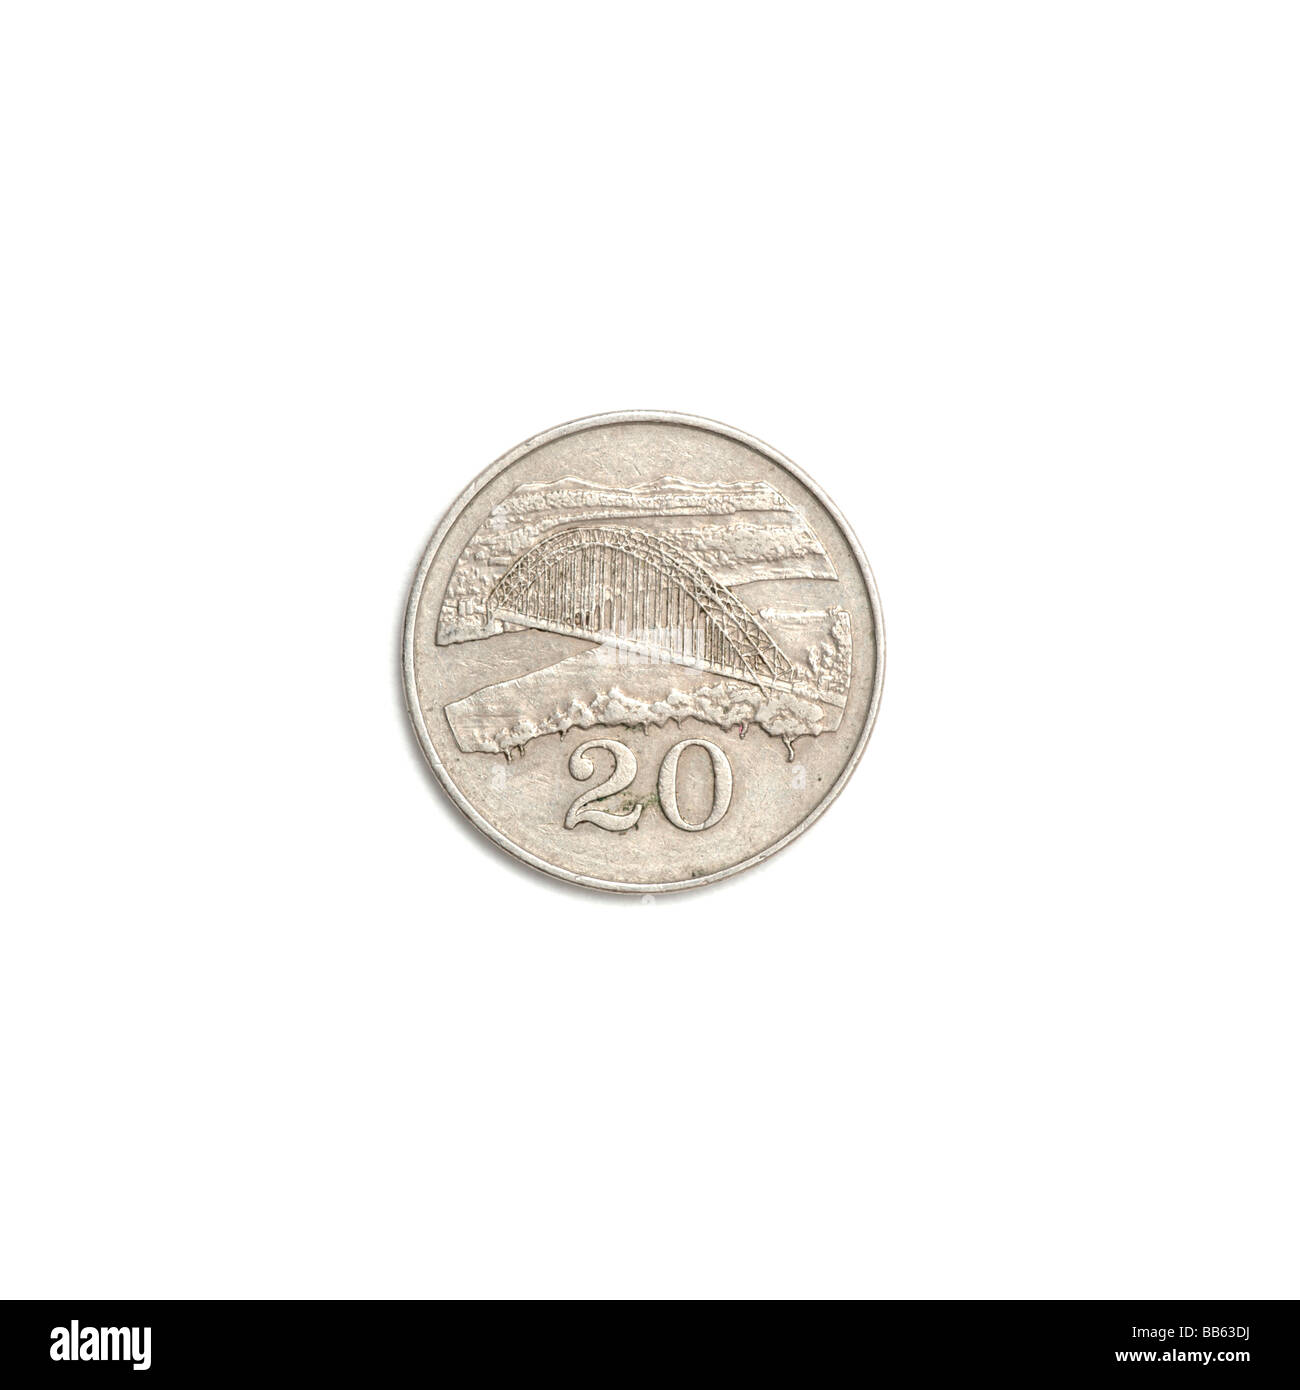 'Zimbabwean coin' Stock Photo